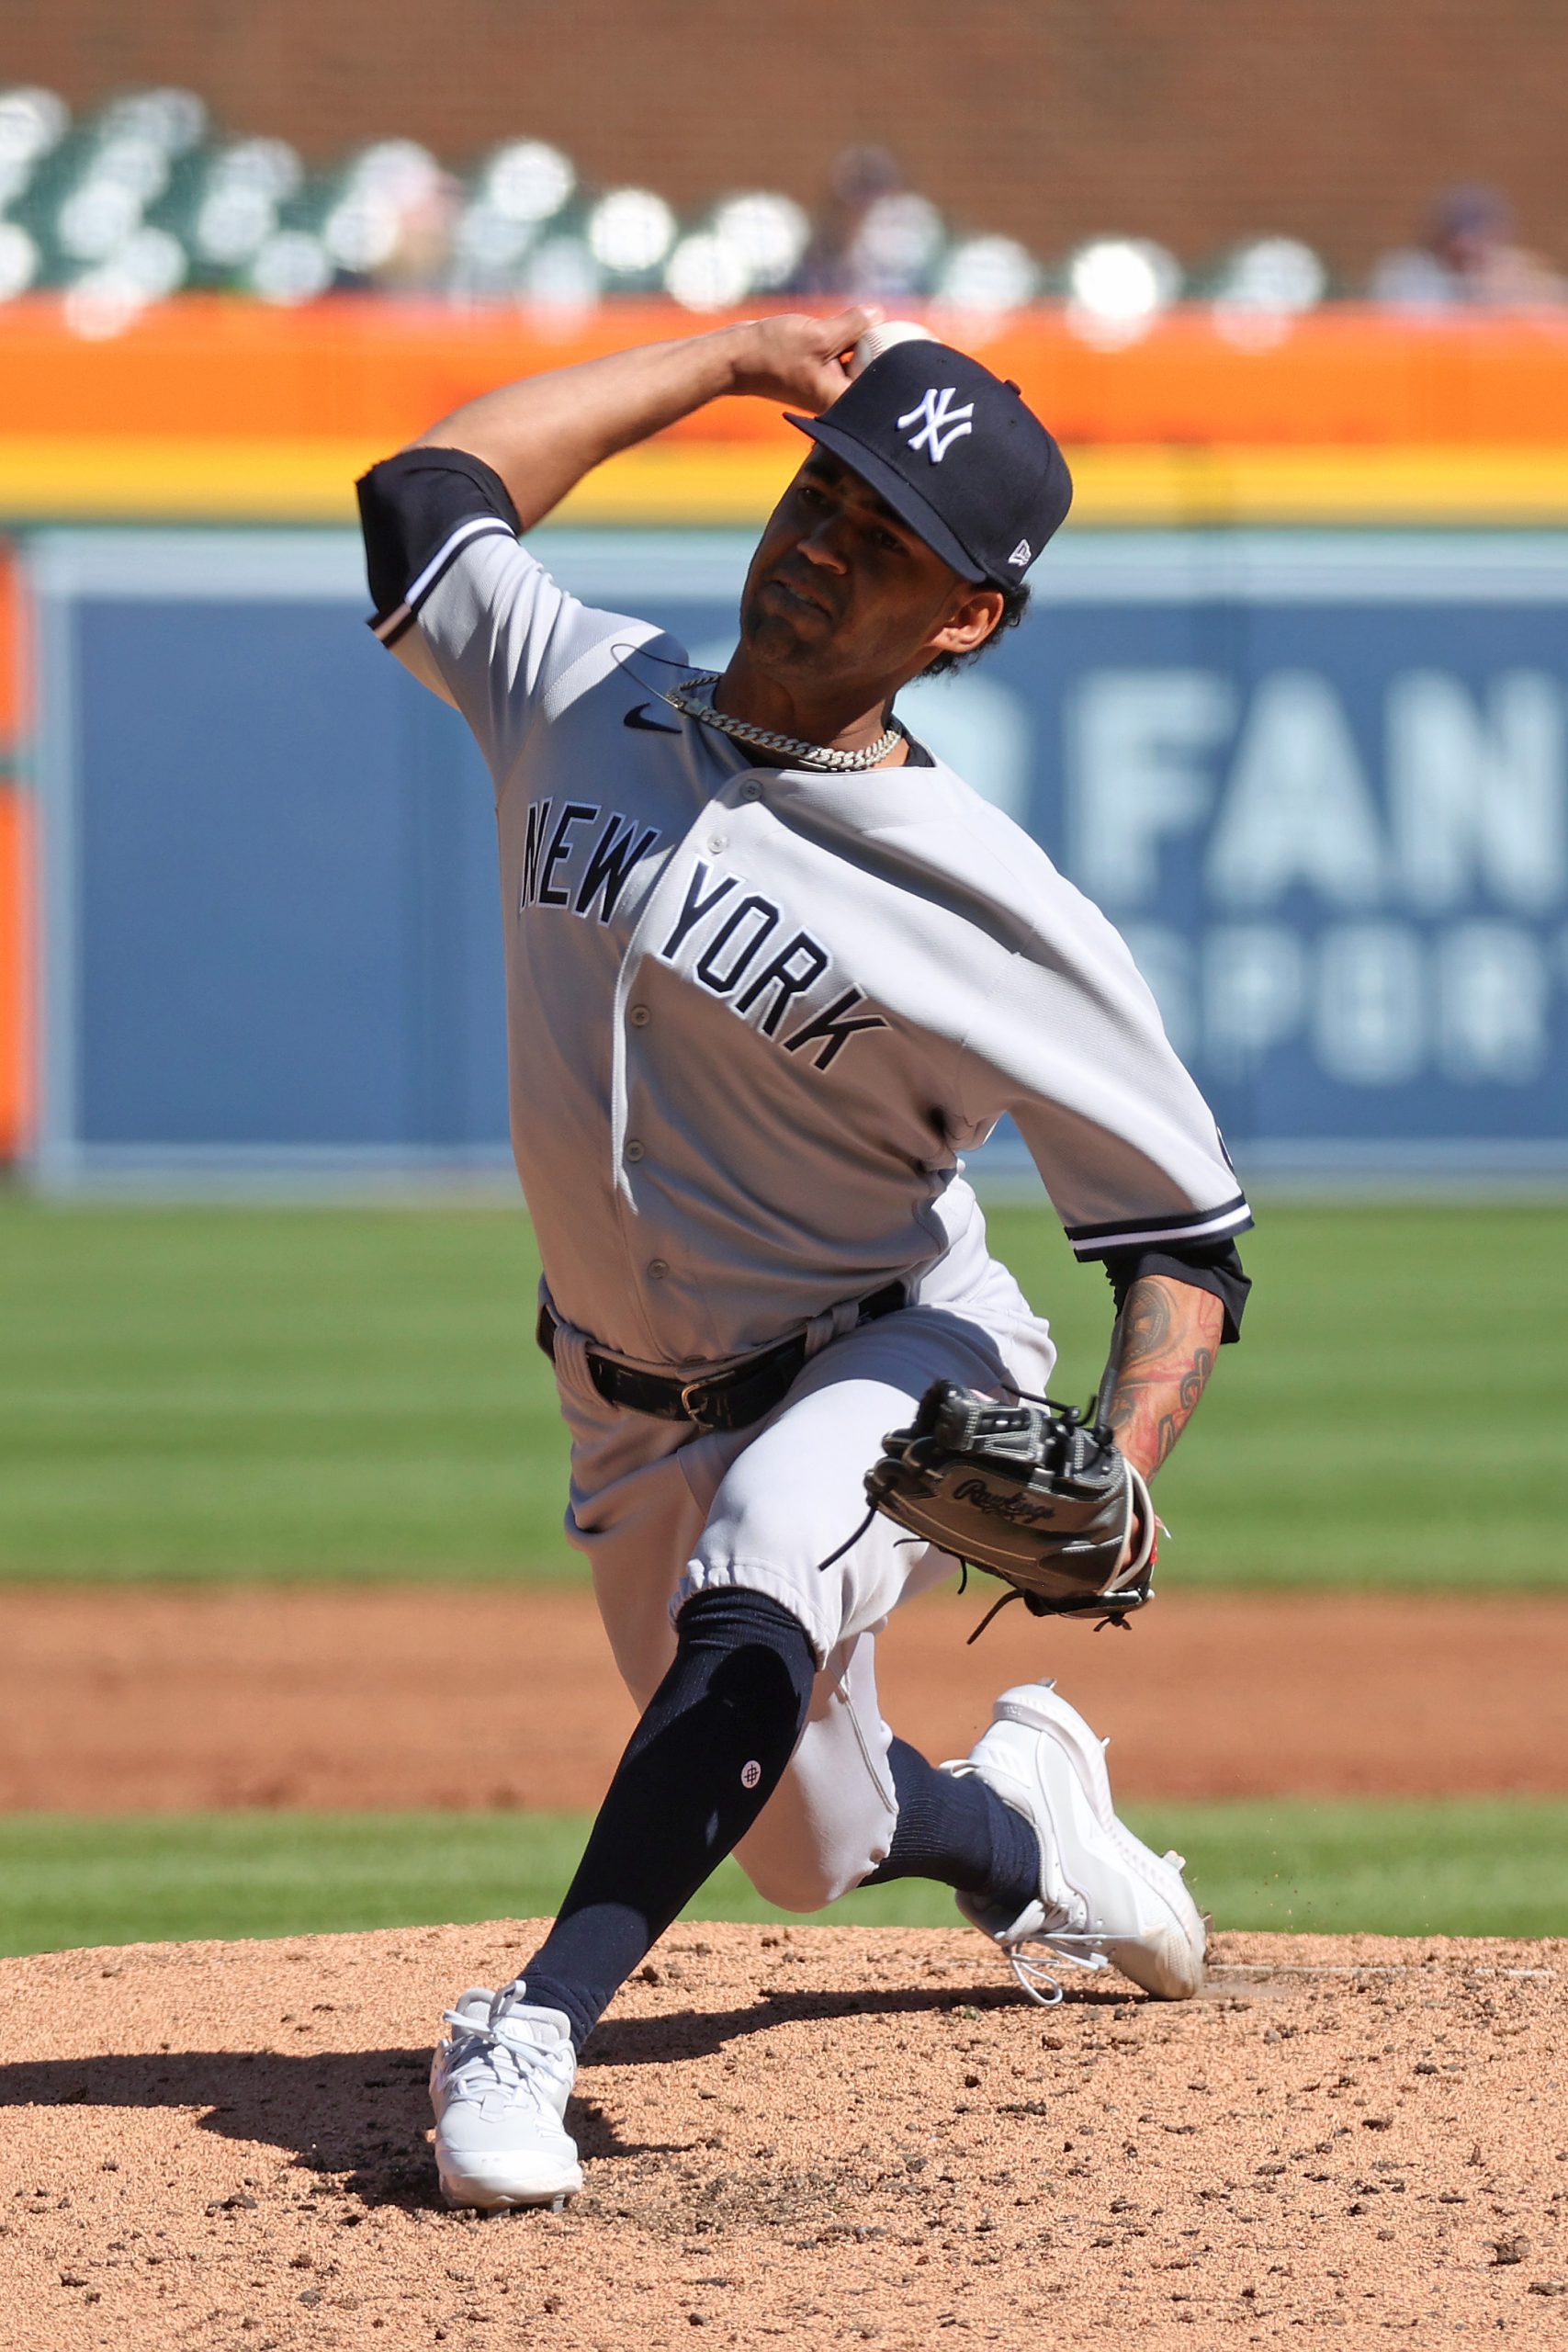 Yankees Prospect yankees mlb jersey zwift s: Week 24 minor league